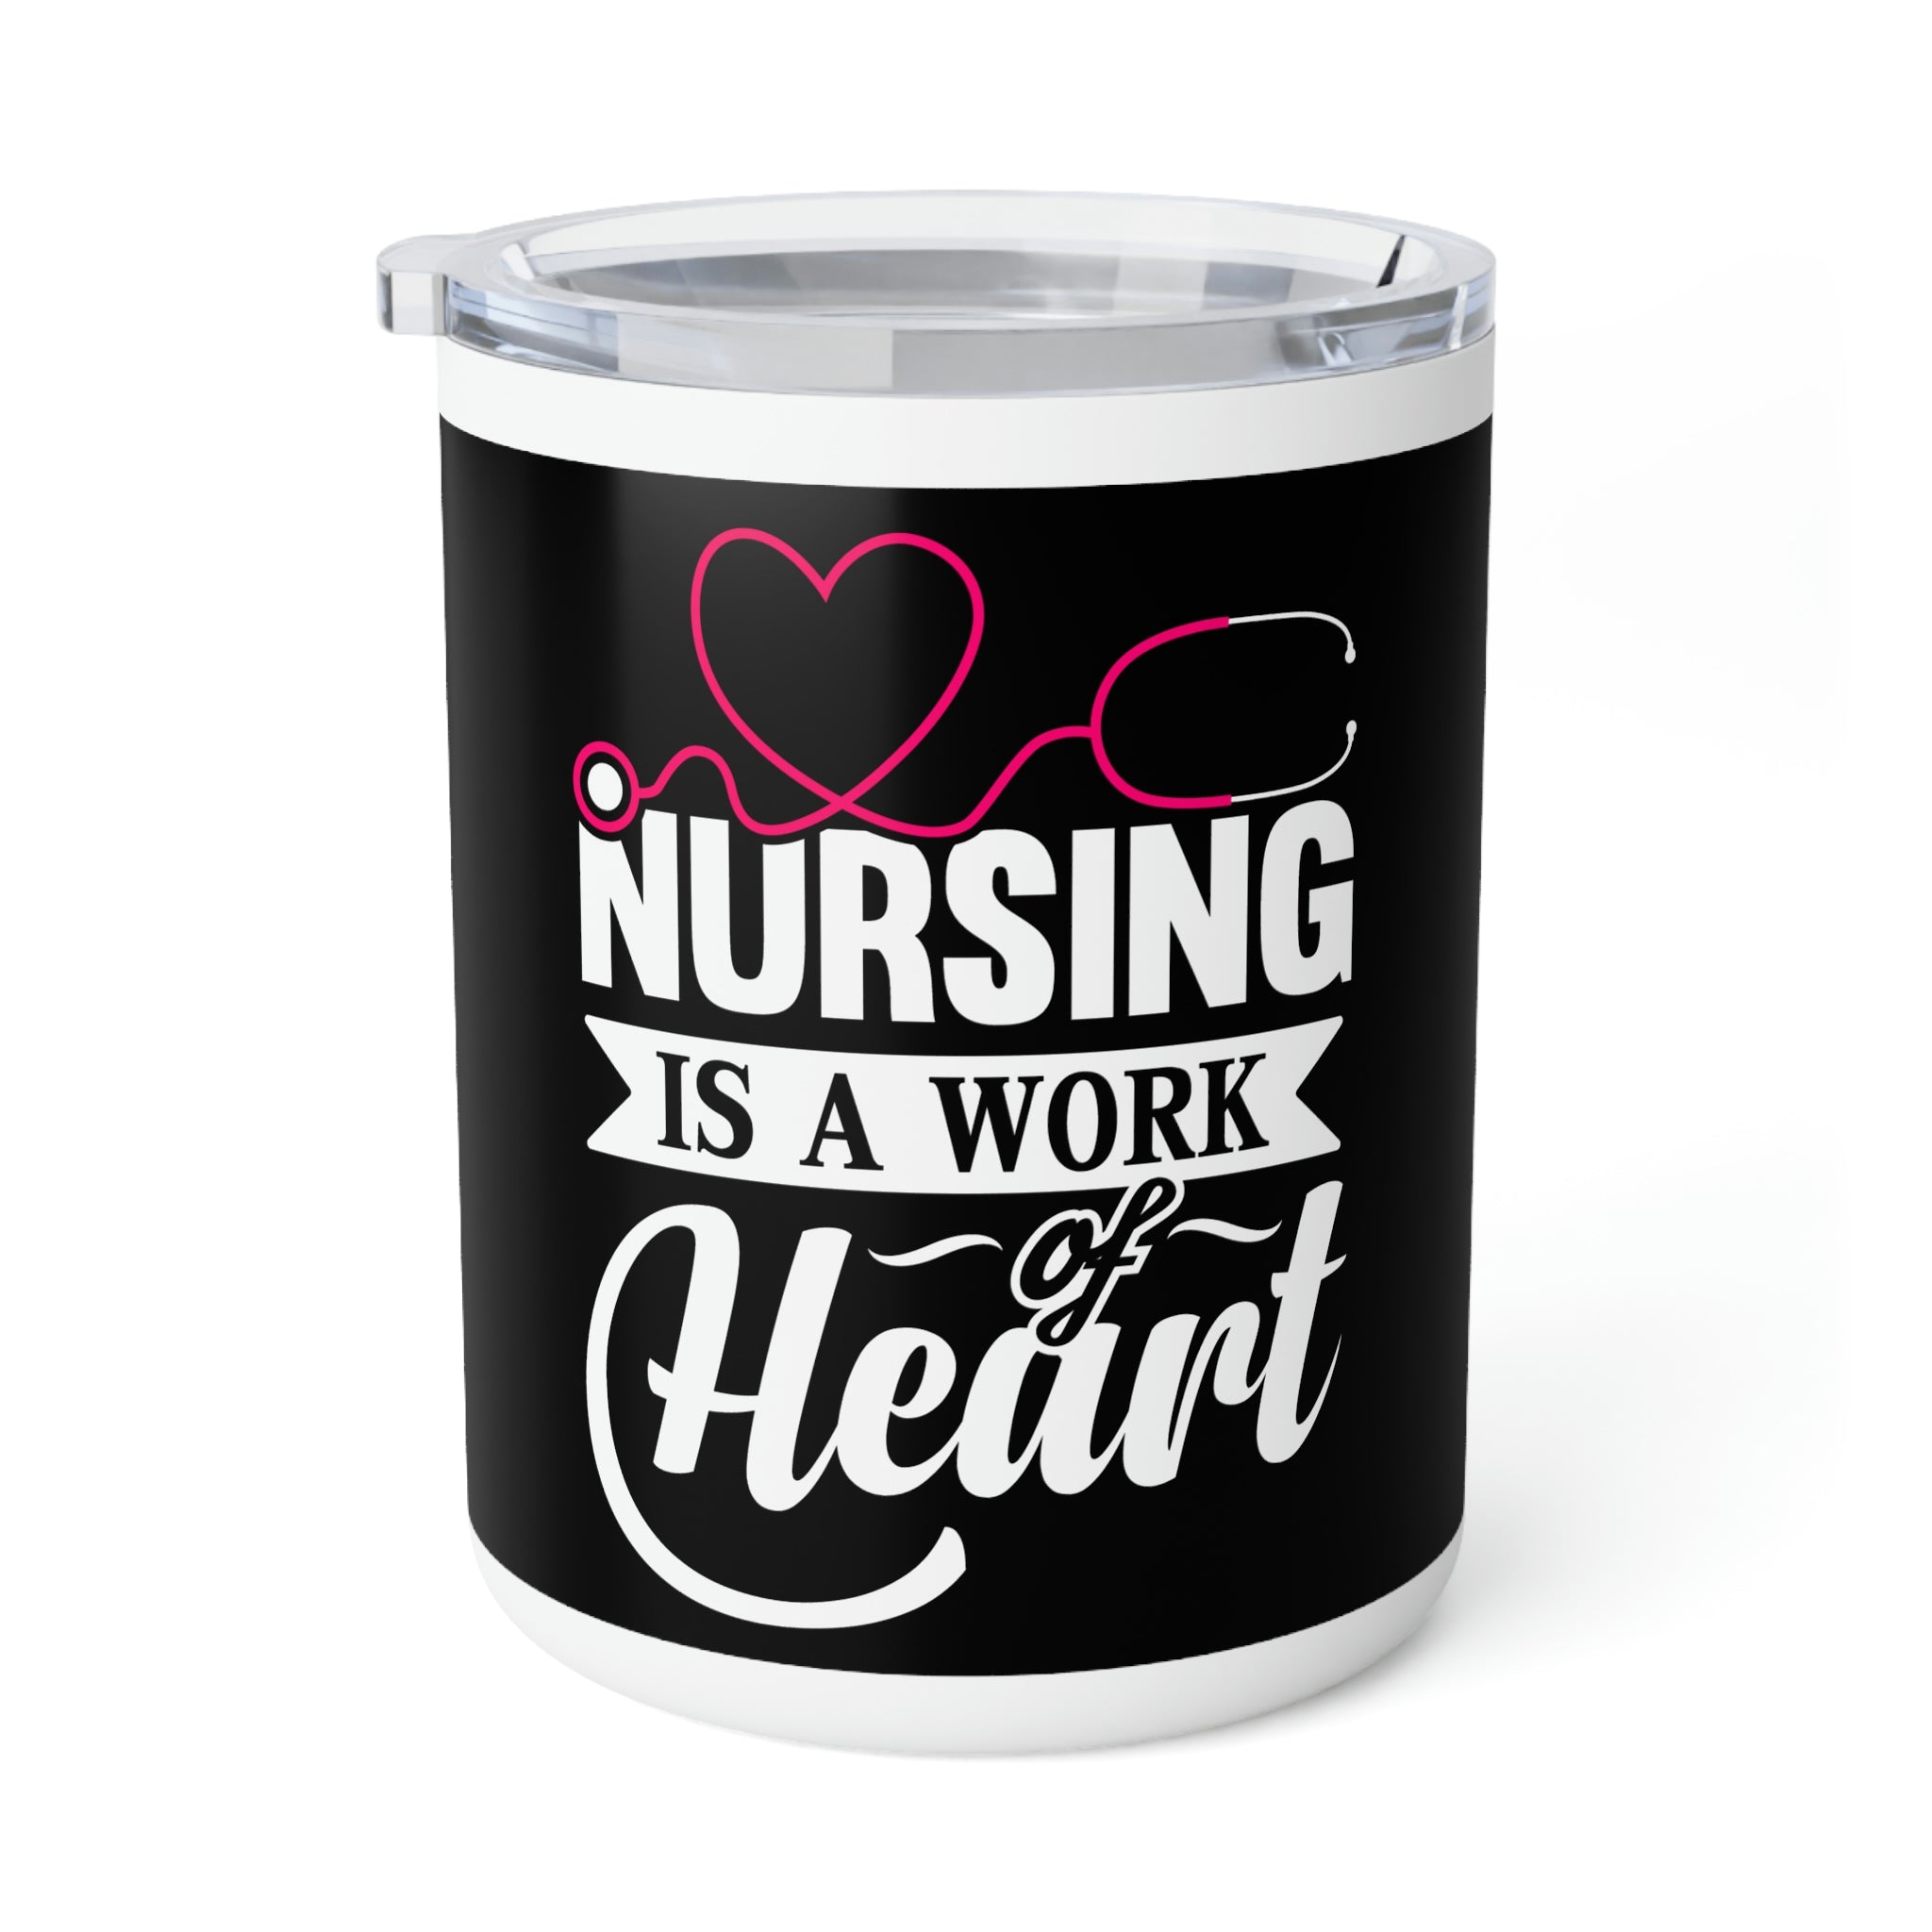 Nursing is a work of heart - Sonhco Mug, 10oz